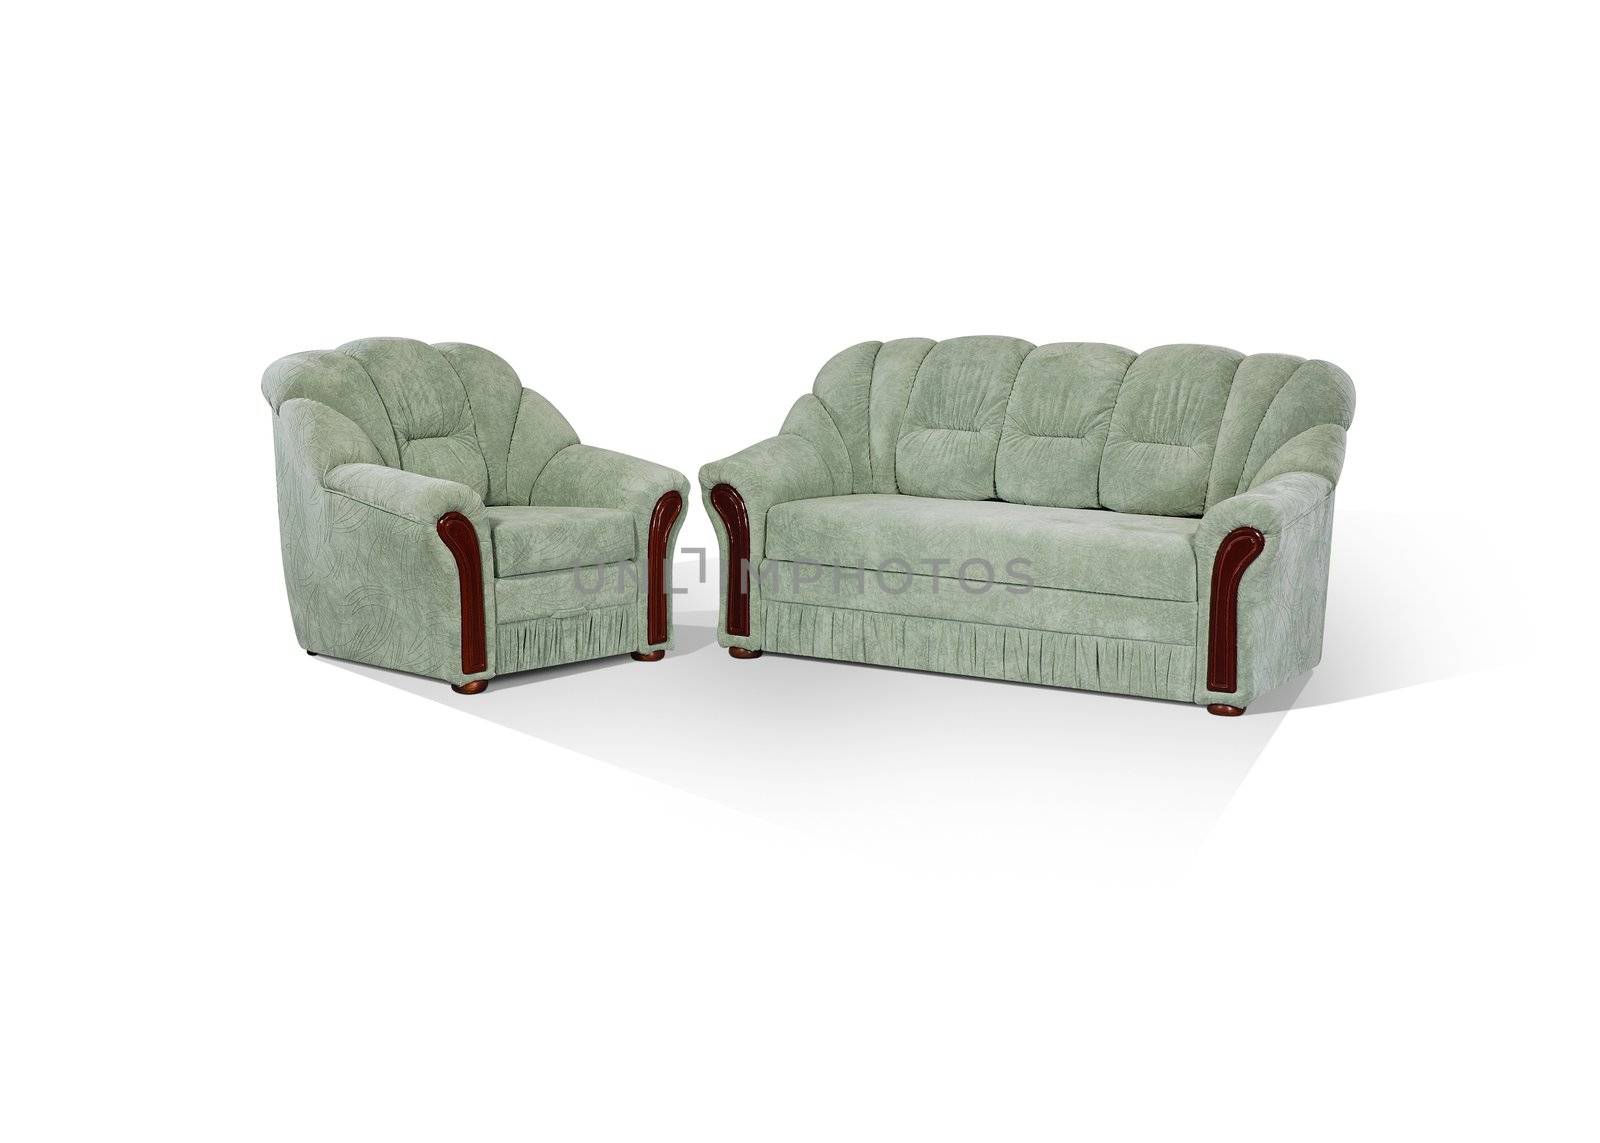 sofa & arm chair by dyoma